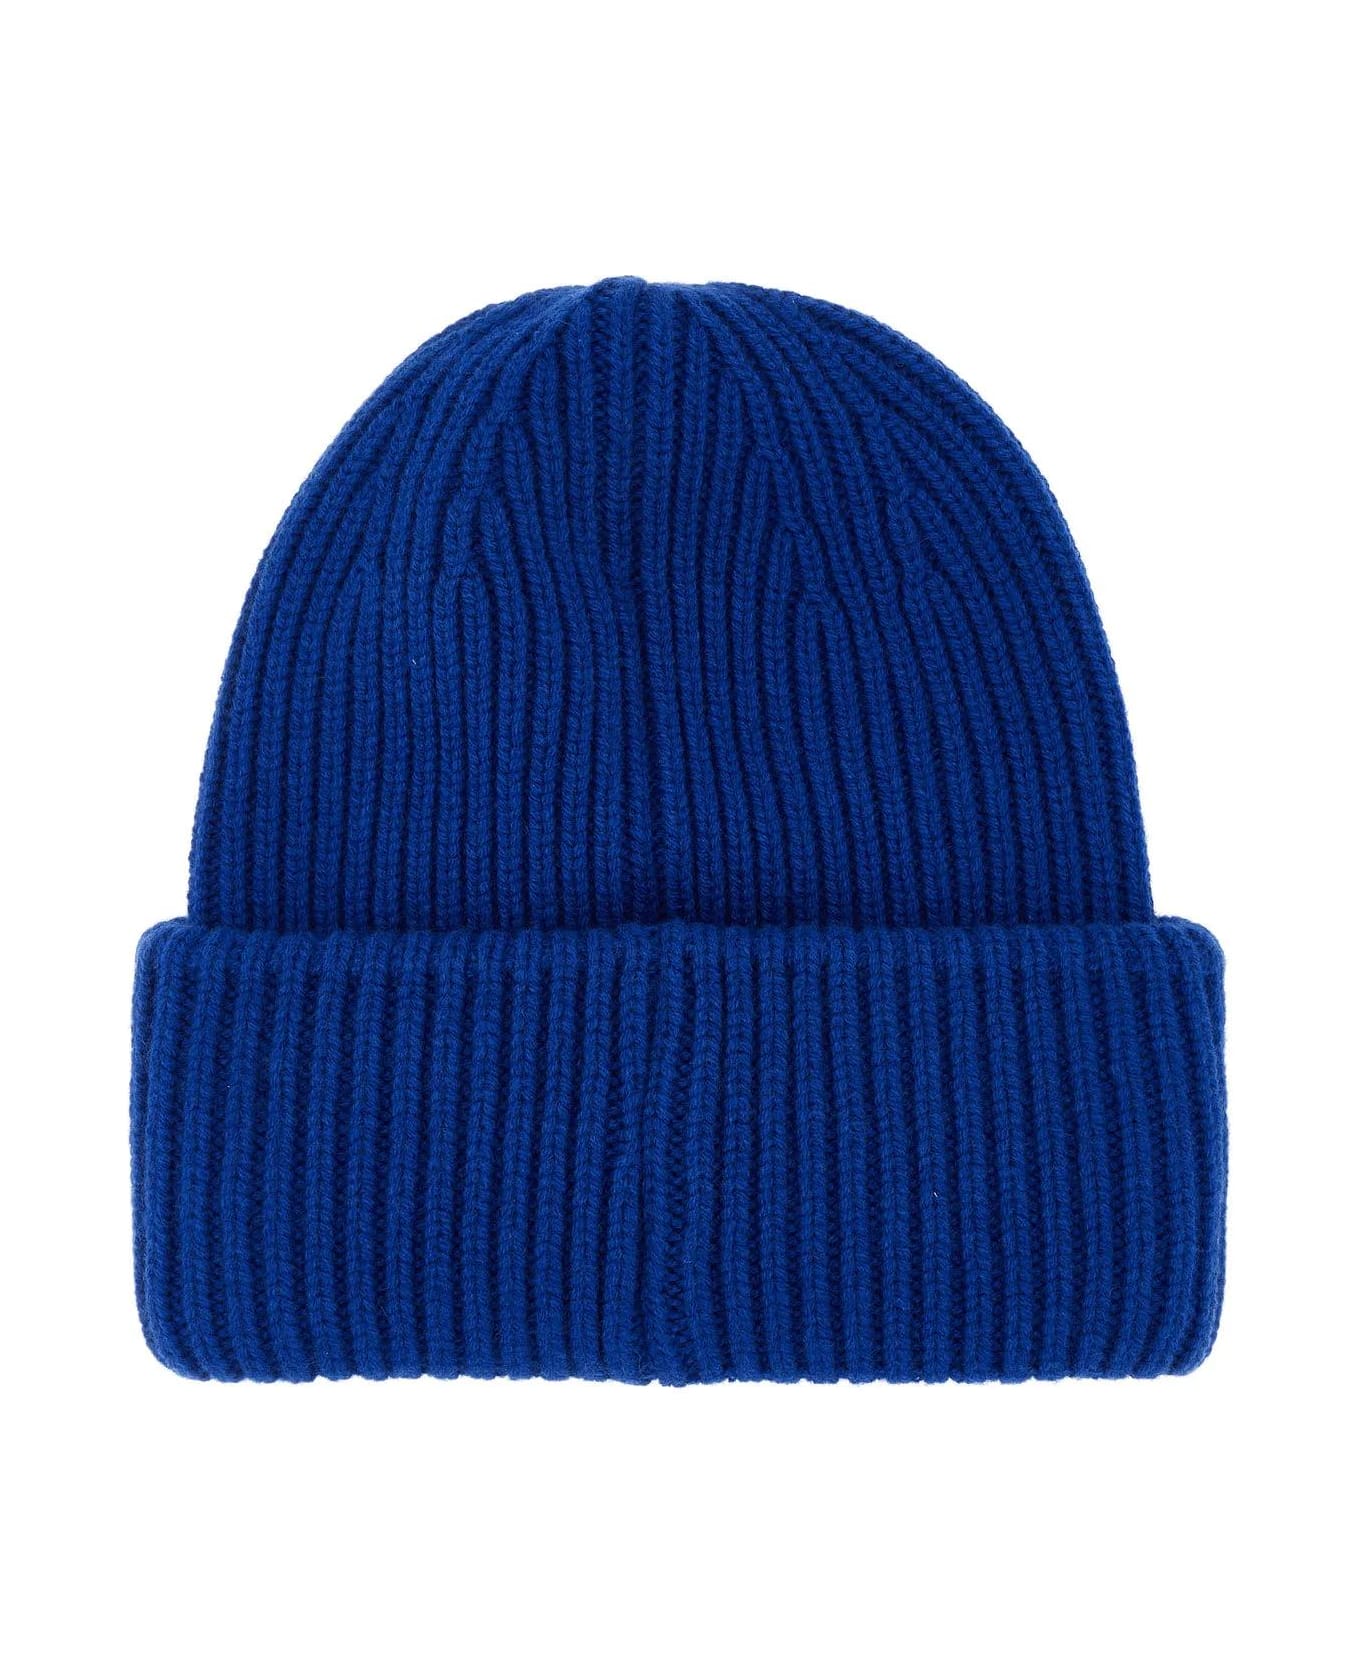 Moncler Electric Blue Wool Blend Beanie Hat - Blue